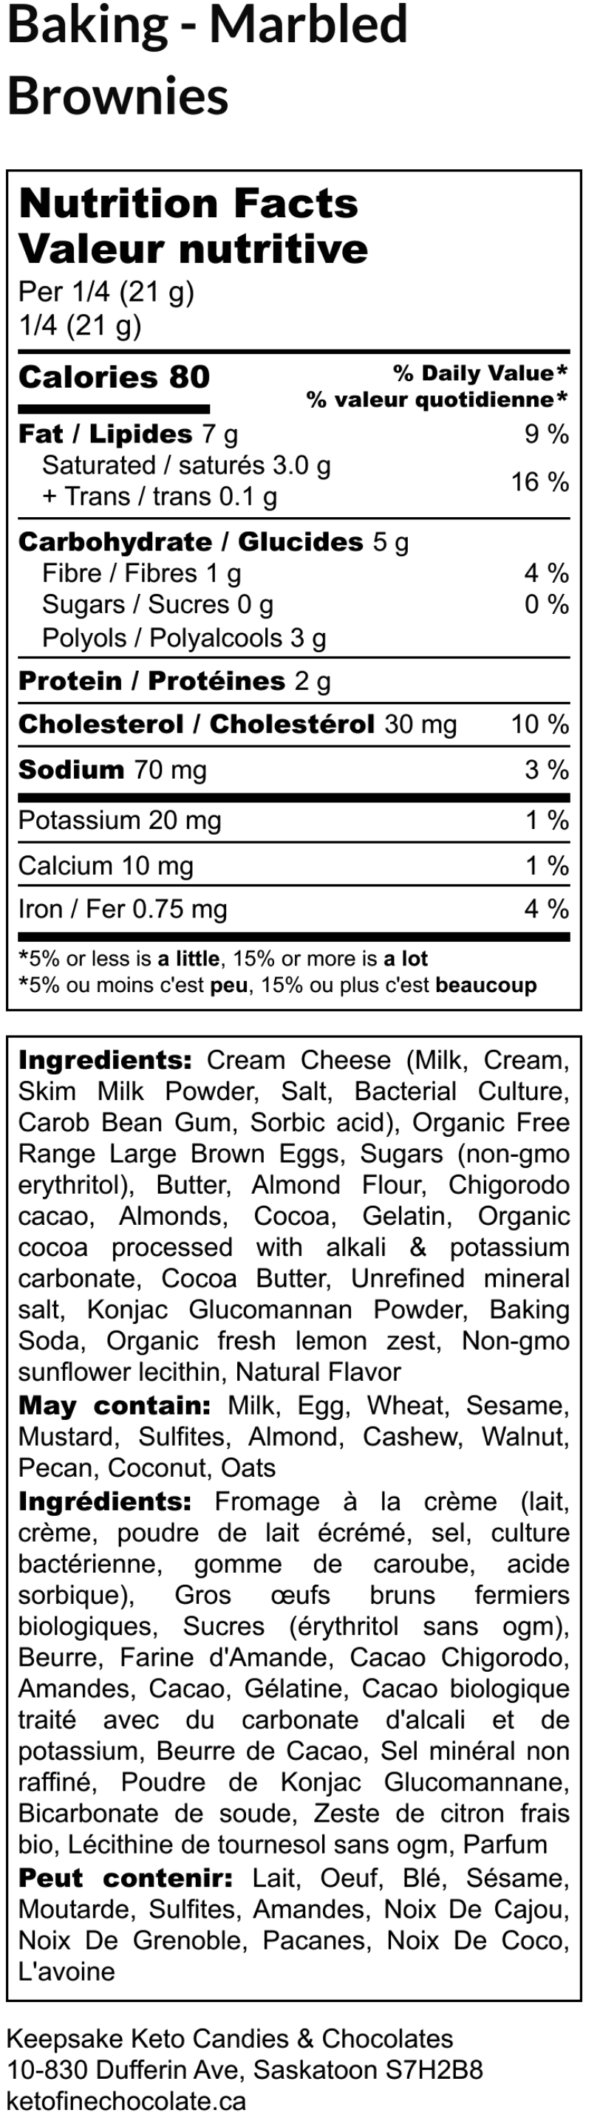 Marbled Brownies_Nutrition